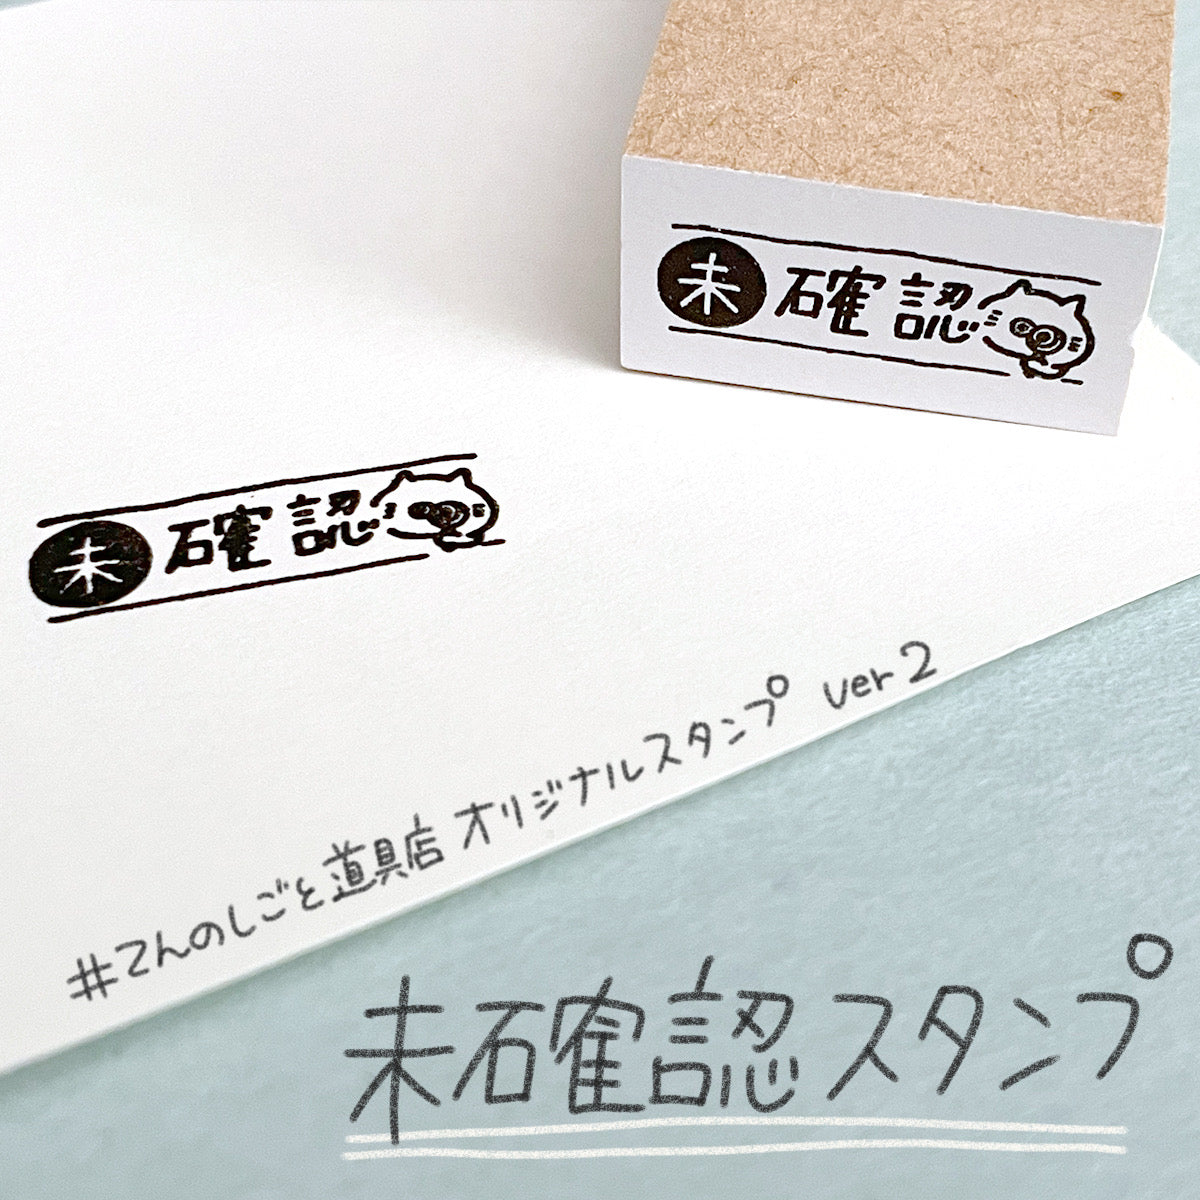 [Ten no Shigoto Dogu Shop Original] "Unconfirmed" stamp (1 x 2 cm)